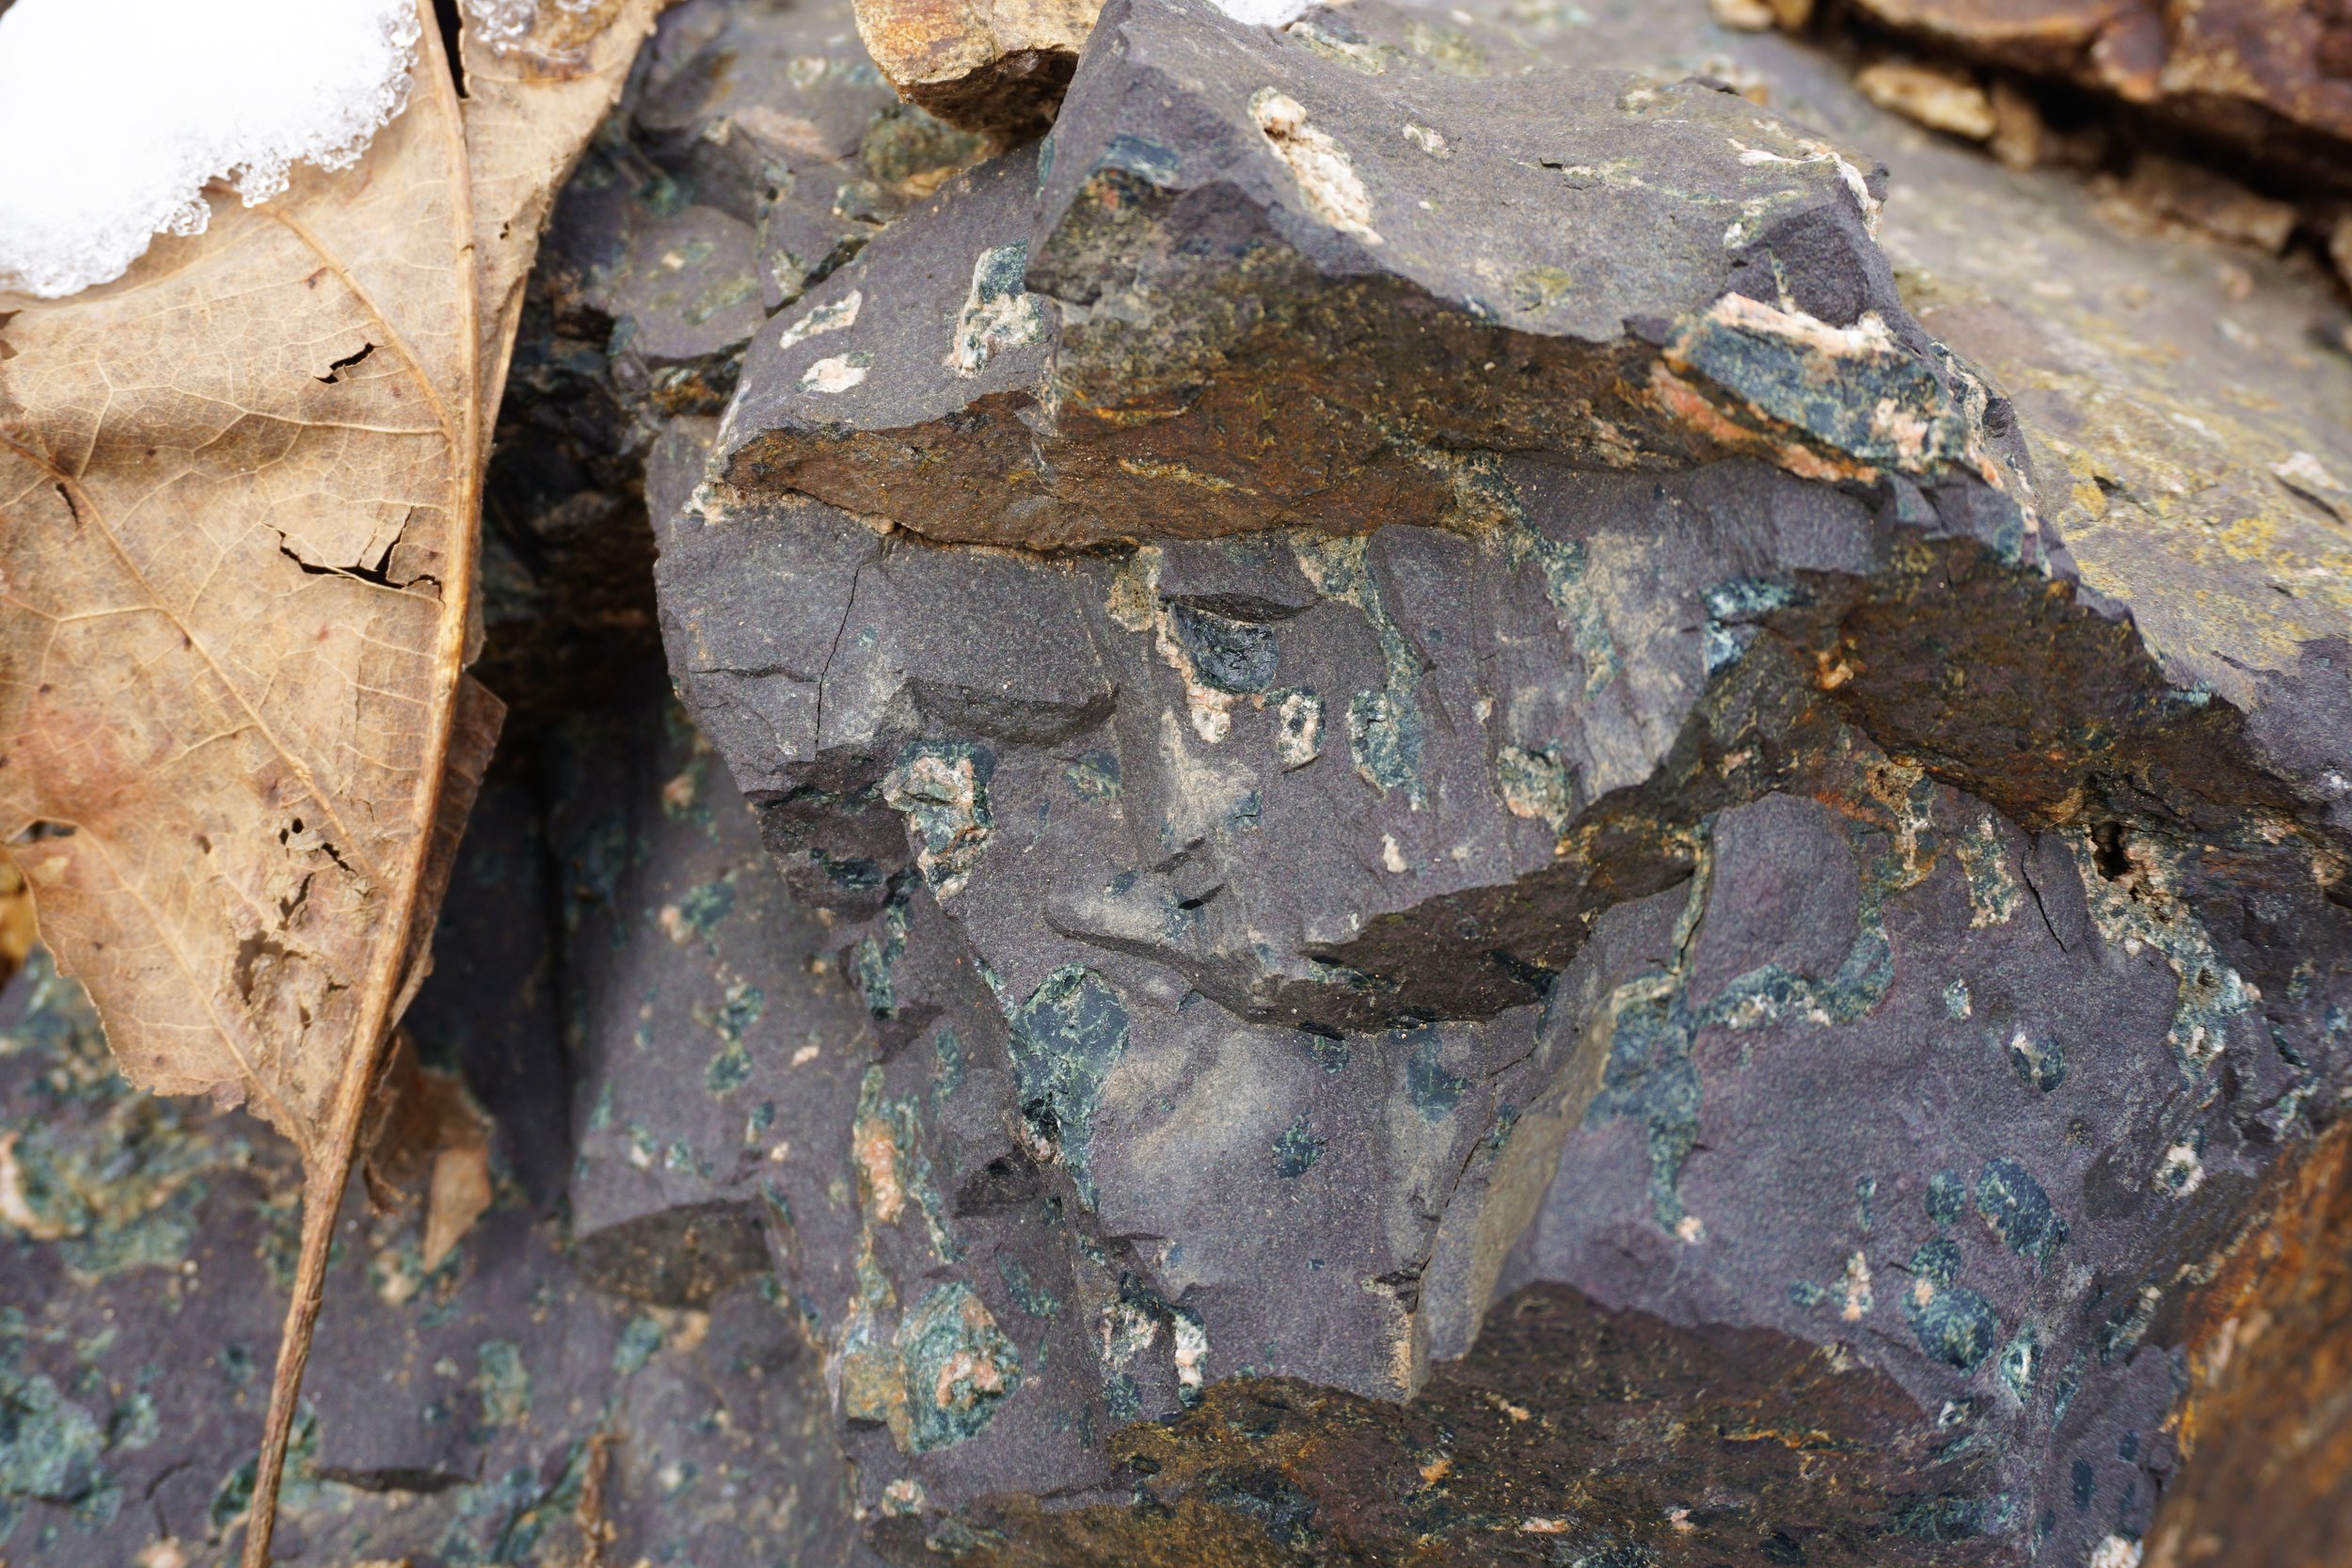 540 Ma basalt with celadonite amygdules.